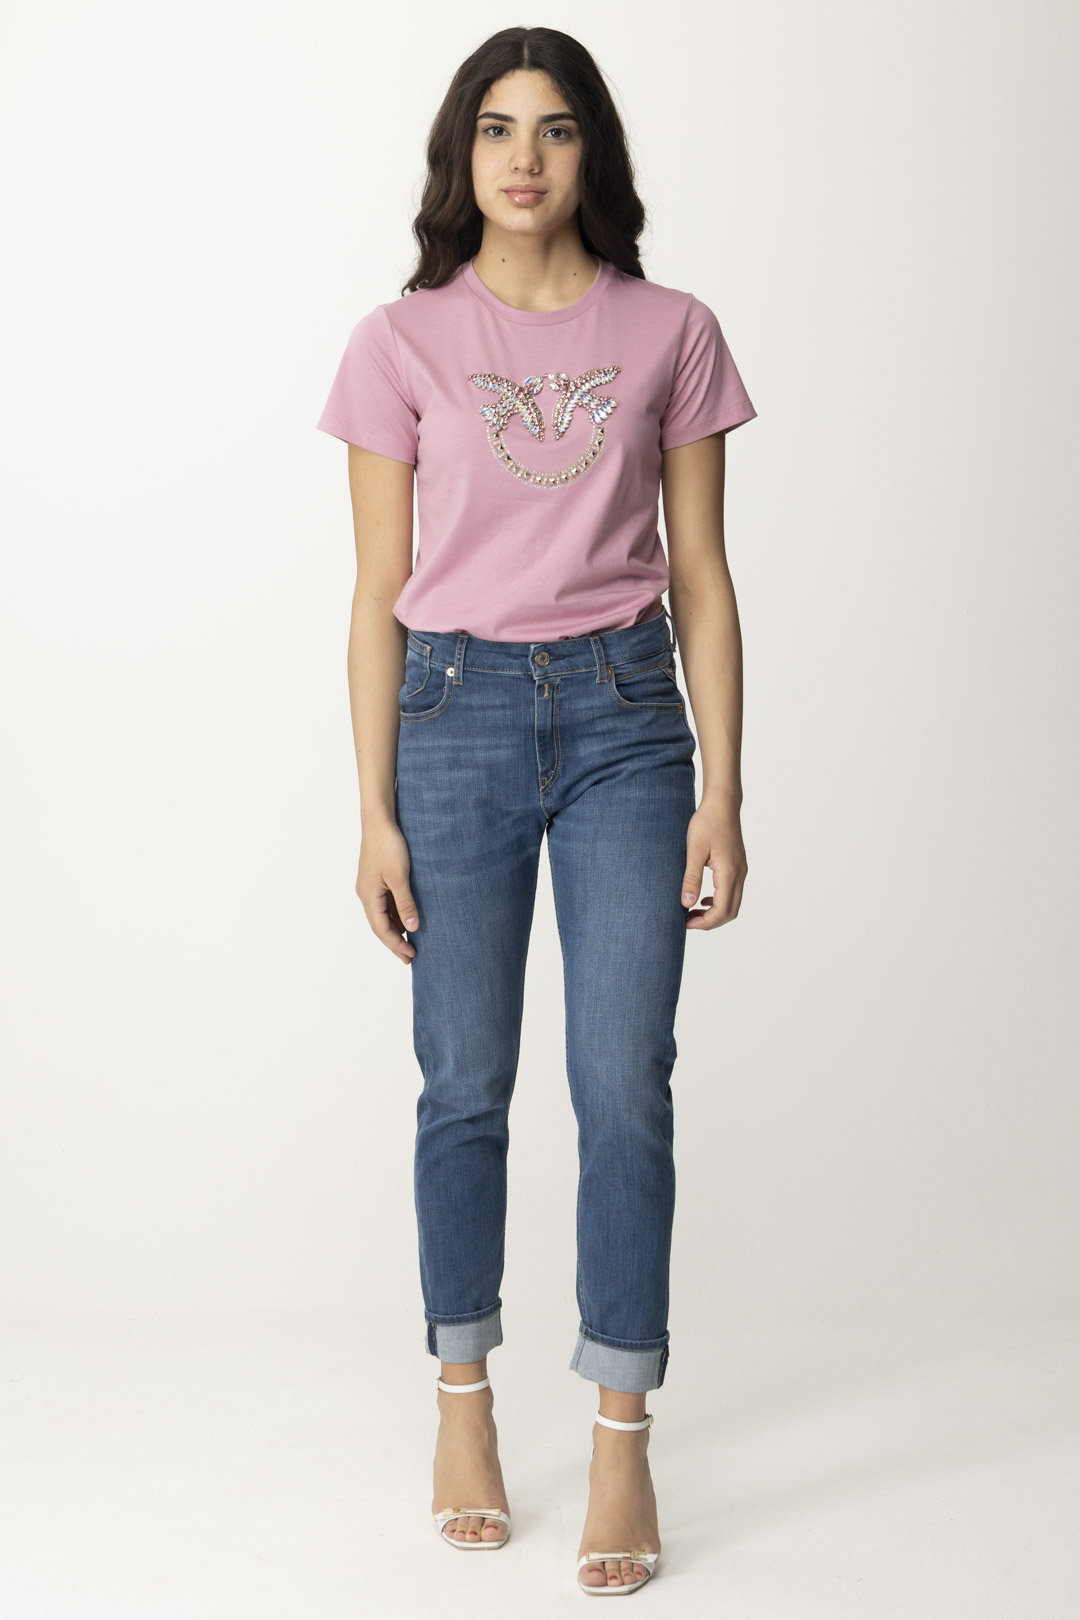 Anteprima: Pinko T-shirt in cotone con maxi logo ricamato FUMO ORCHIDEA